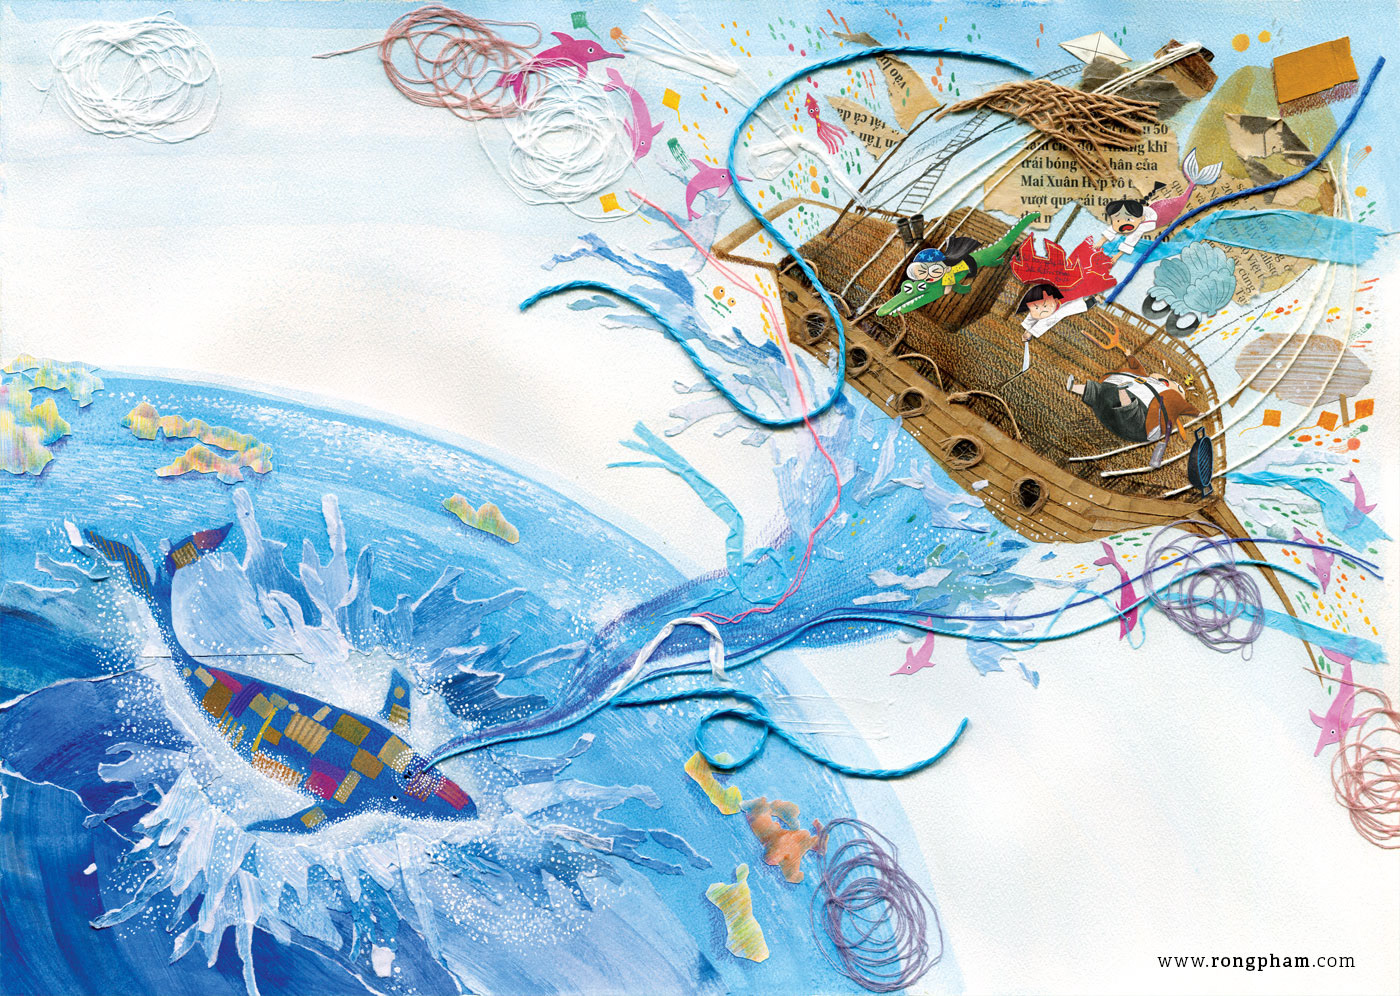 mixed media sea Ocean play pirate voyage wonderland dreamland imagination inspire